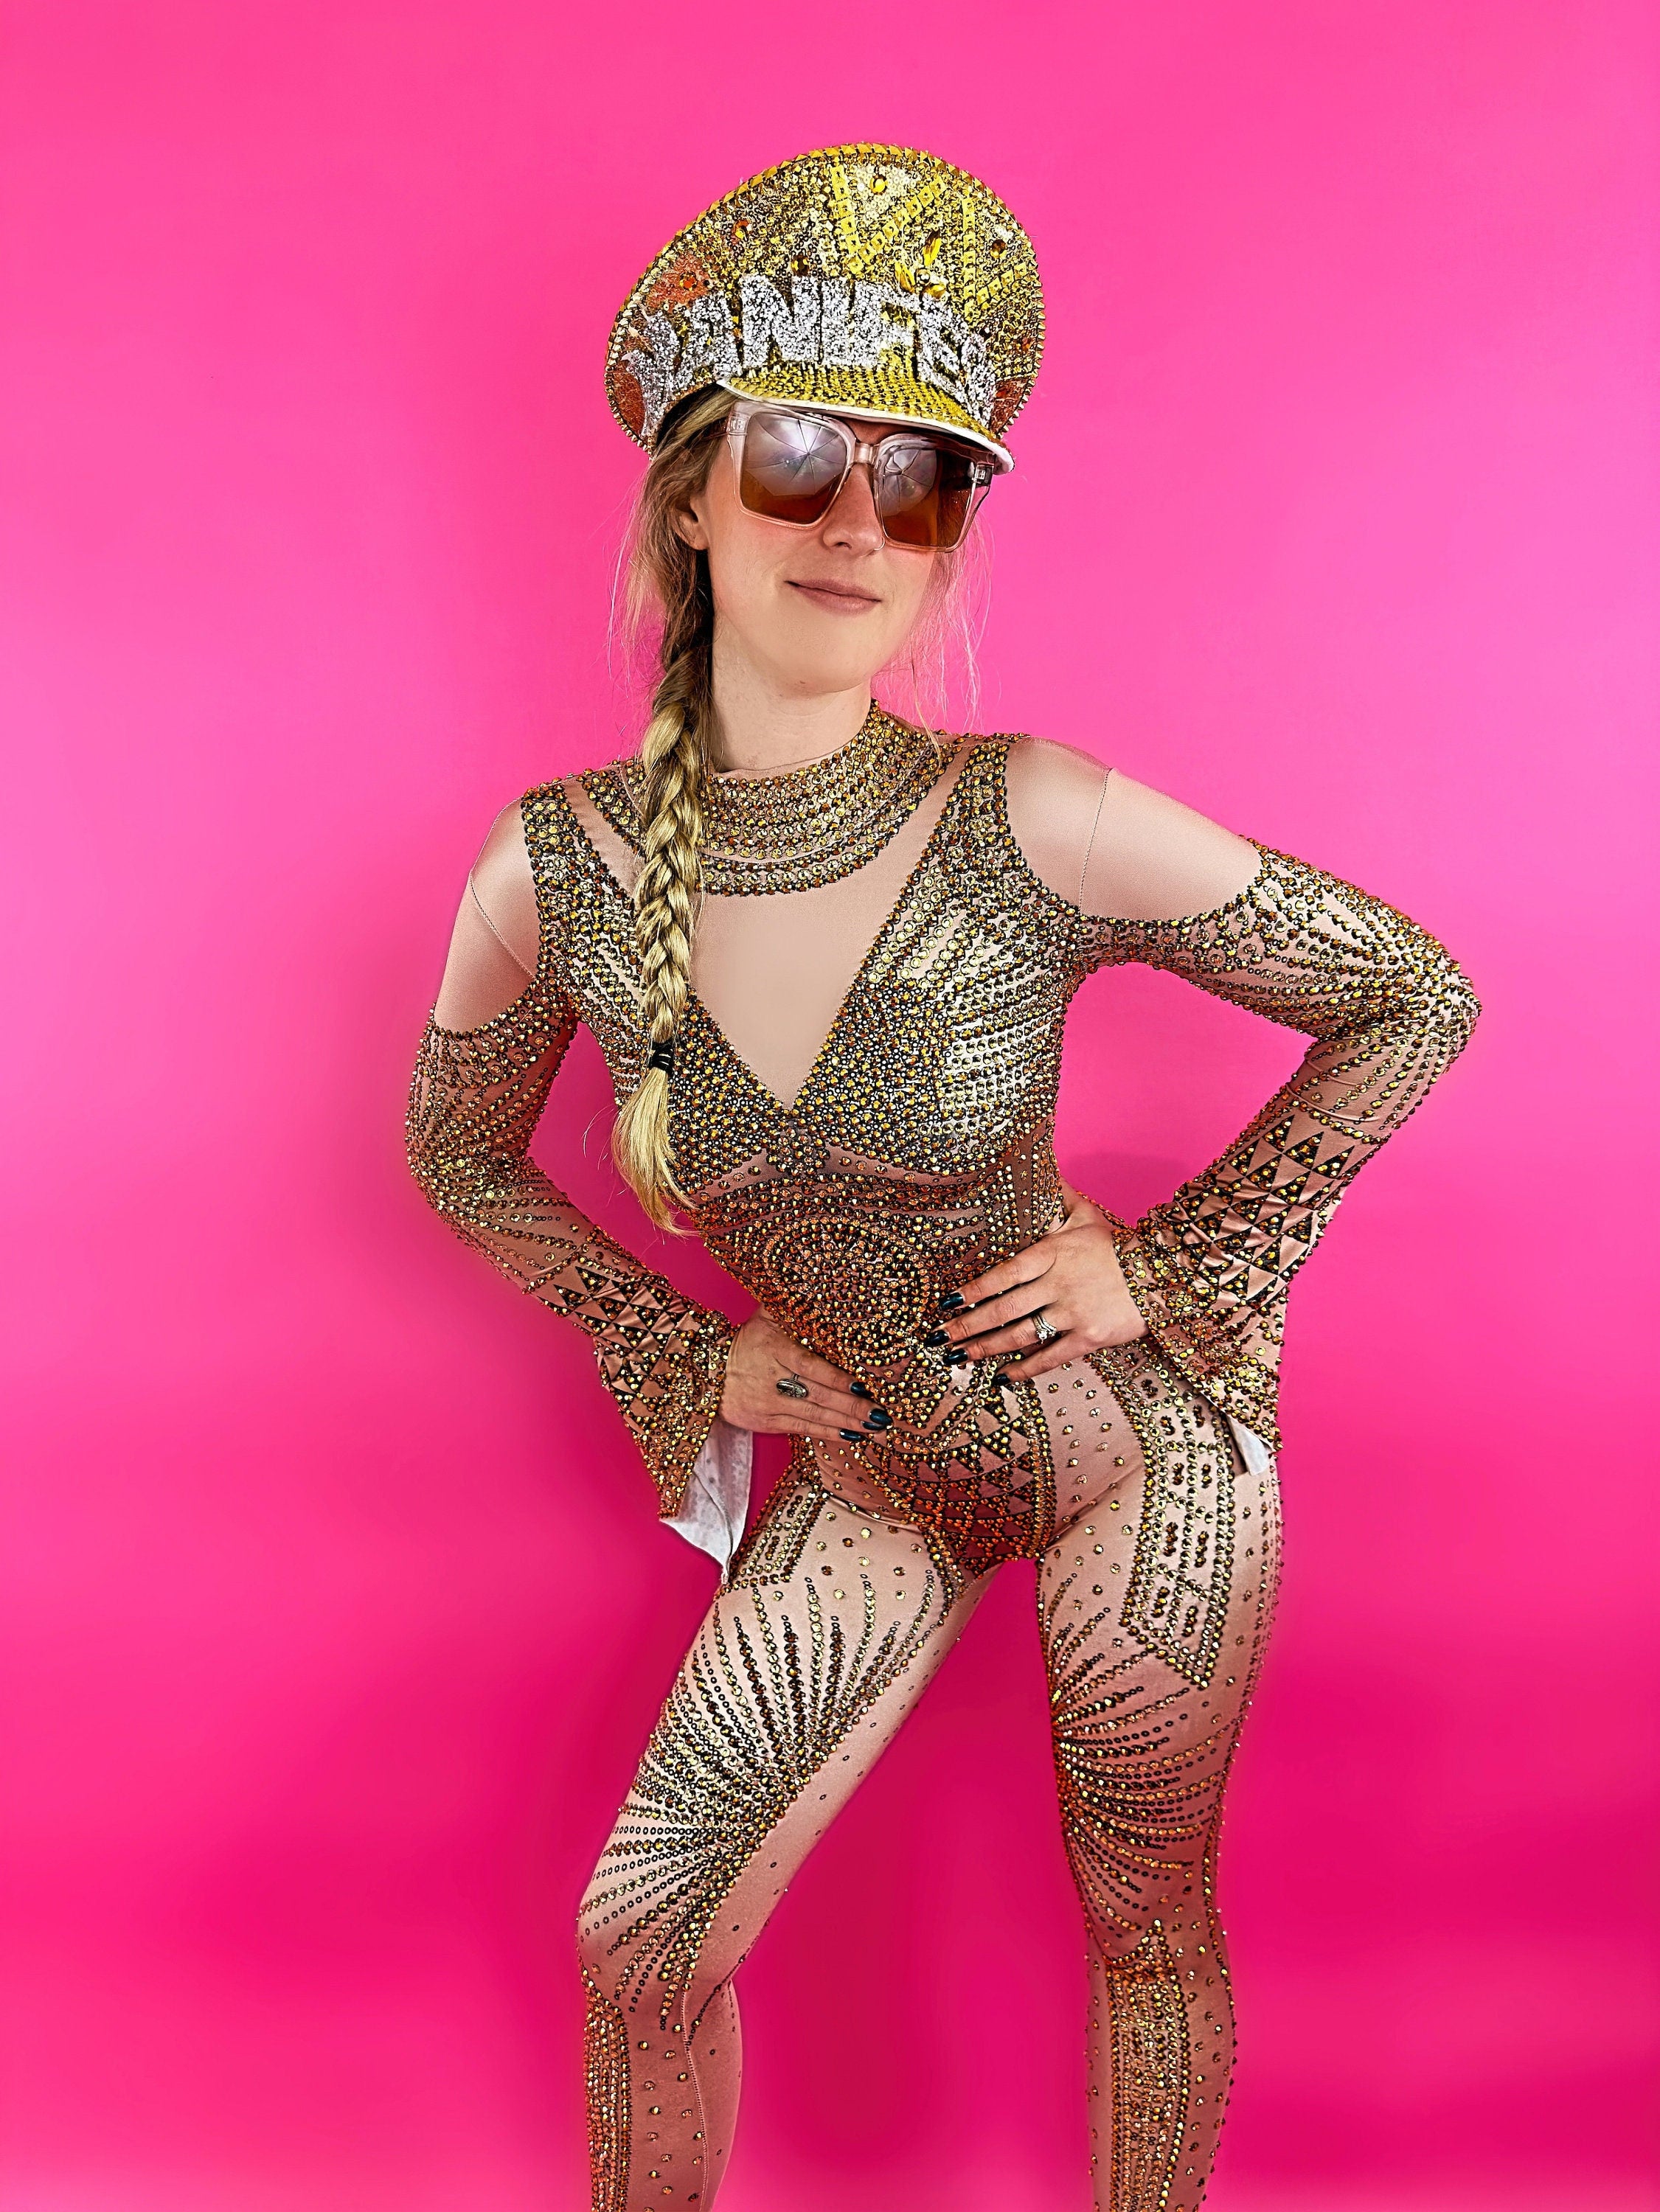 Ara Rhinestone Bodysuit / Gold Sun Party Dress Diamond Crystal Catsuit / Festival Outfit / Desert NYE Tribal Burning Man Performer Dance